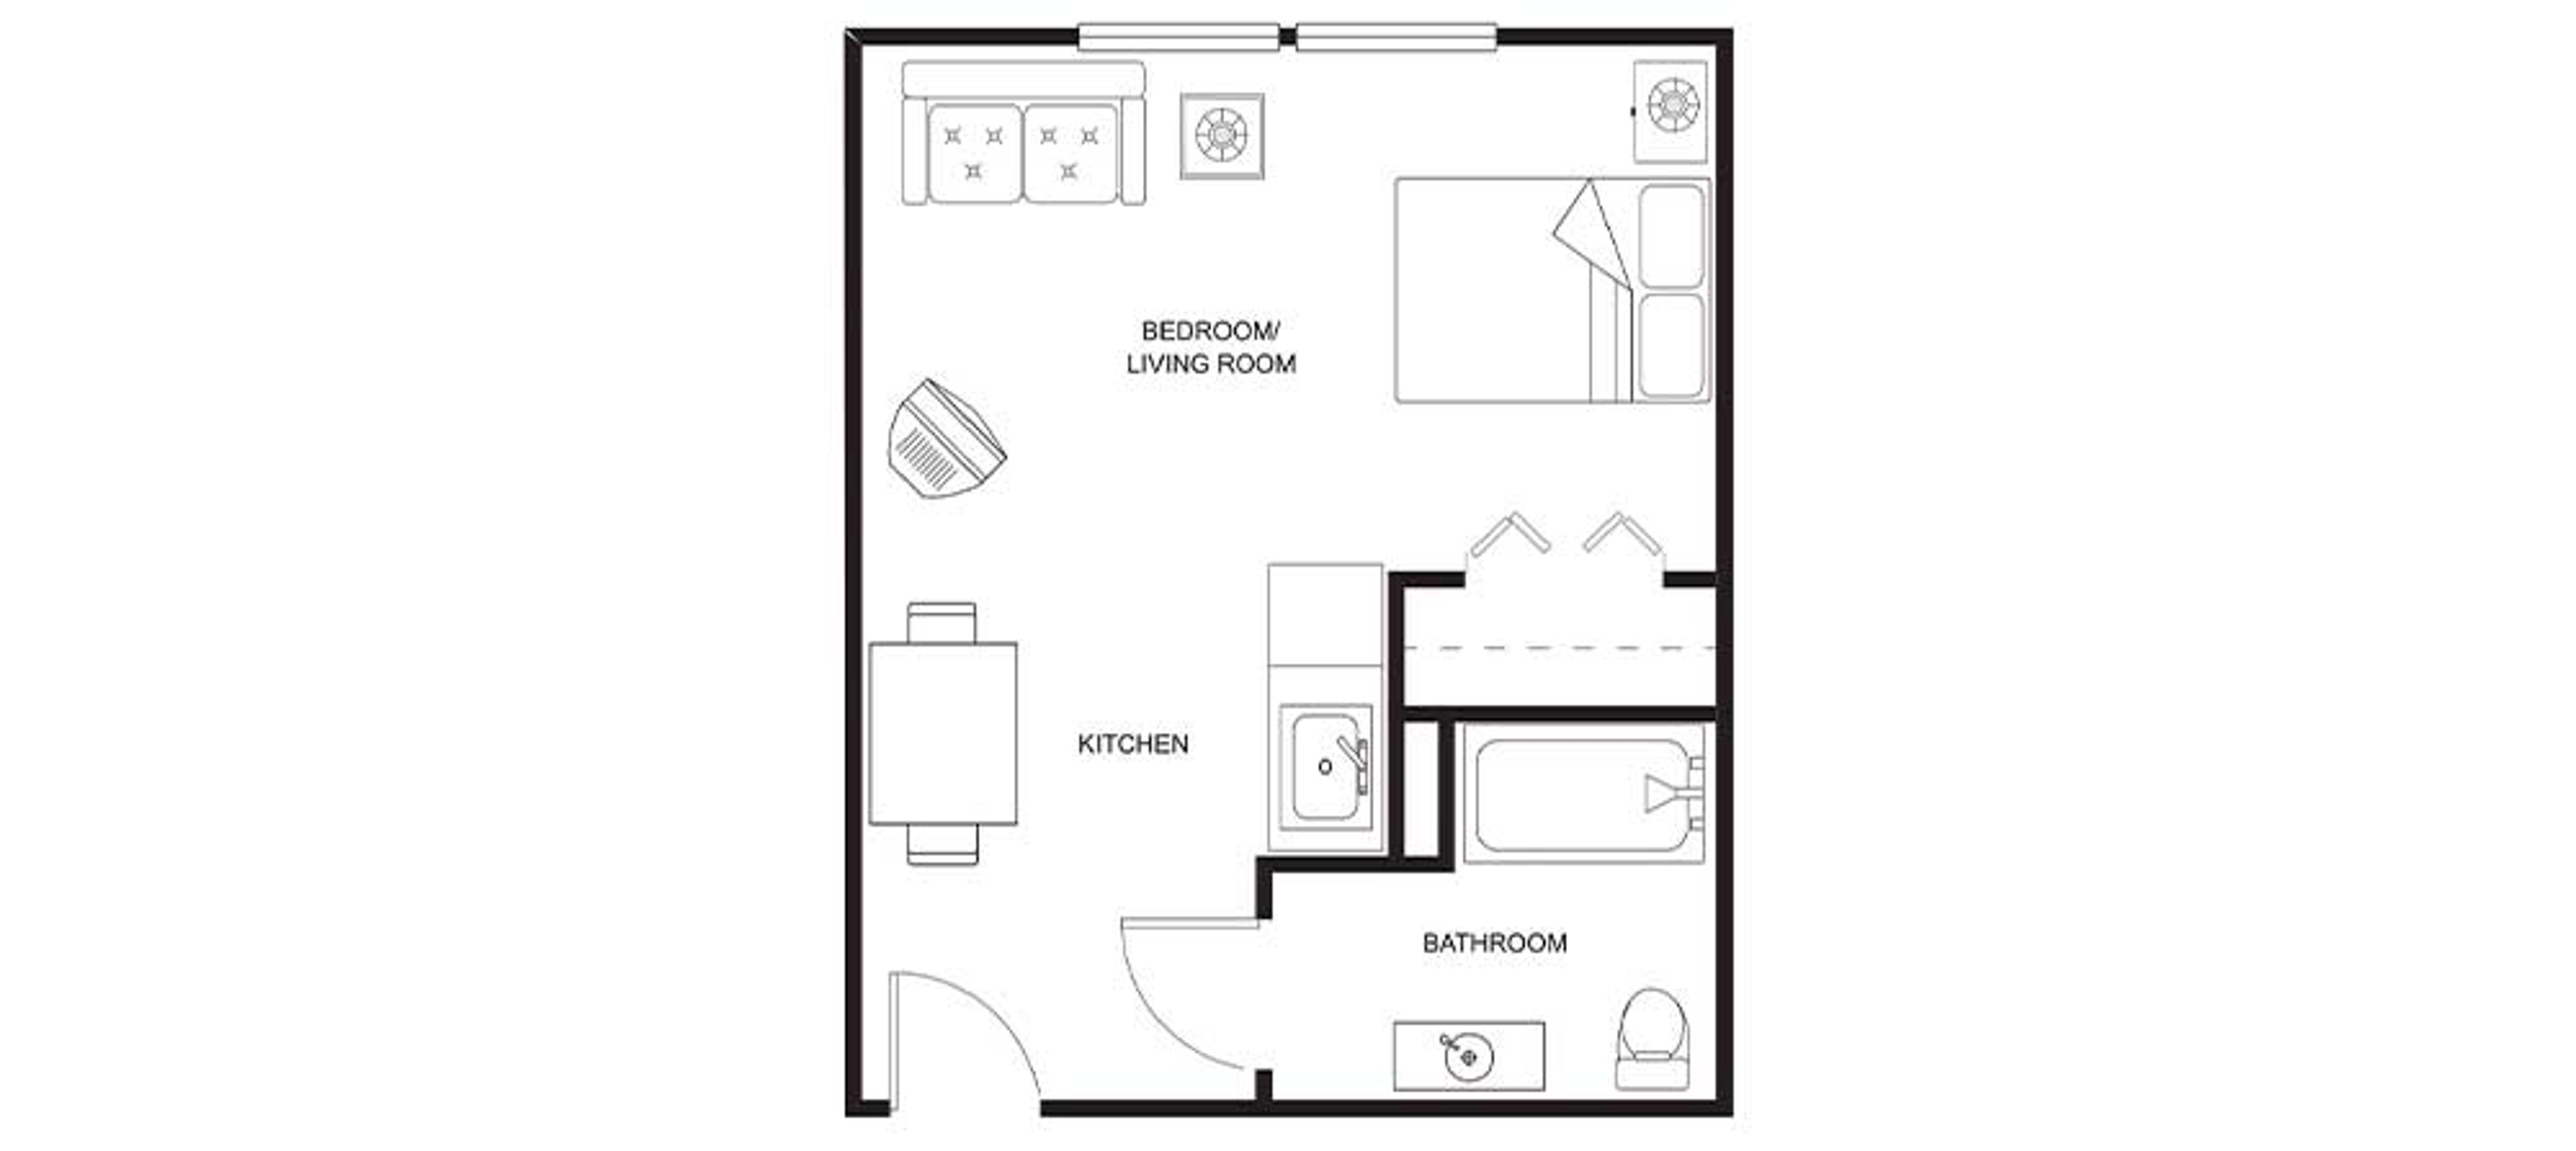 Floorplan - Bay Side Terrace - Studio S1 Assisted Living